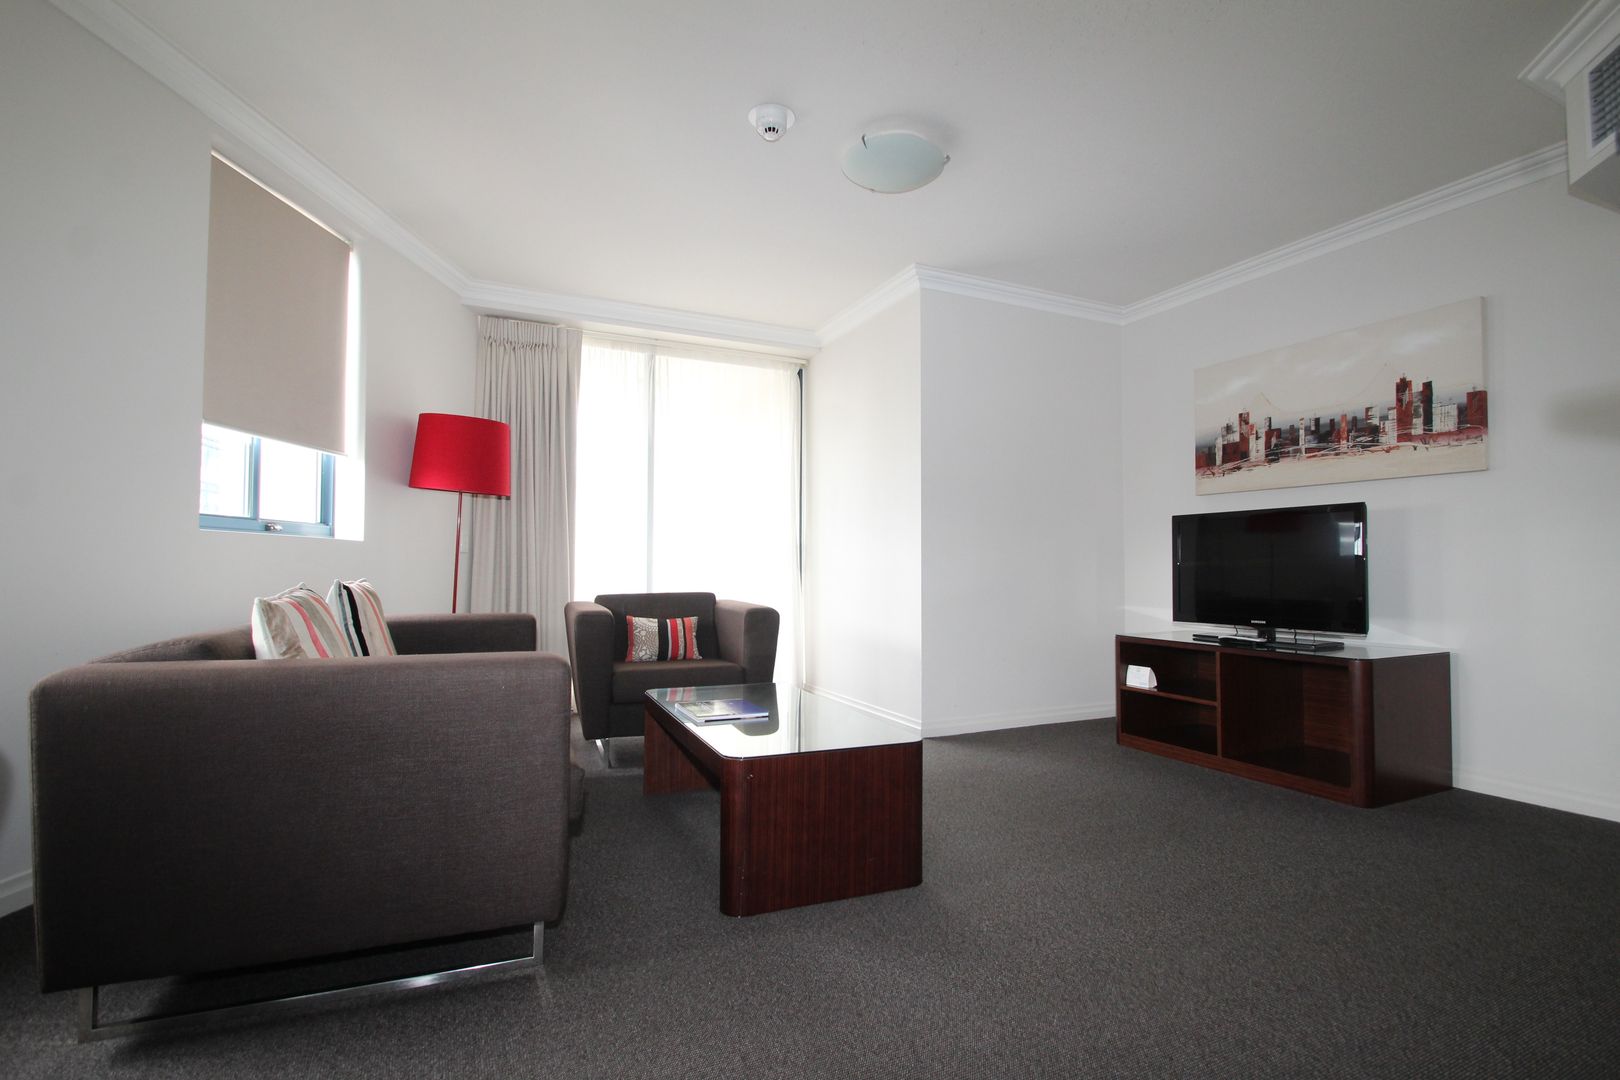 706 570 Queen Street Brisbane City Qld 4000 Apartment